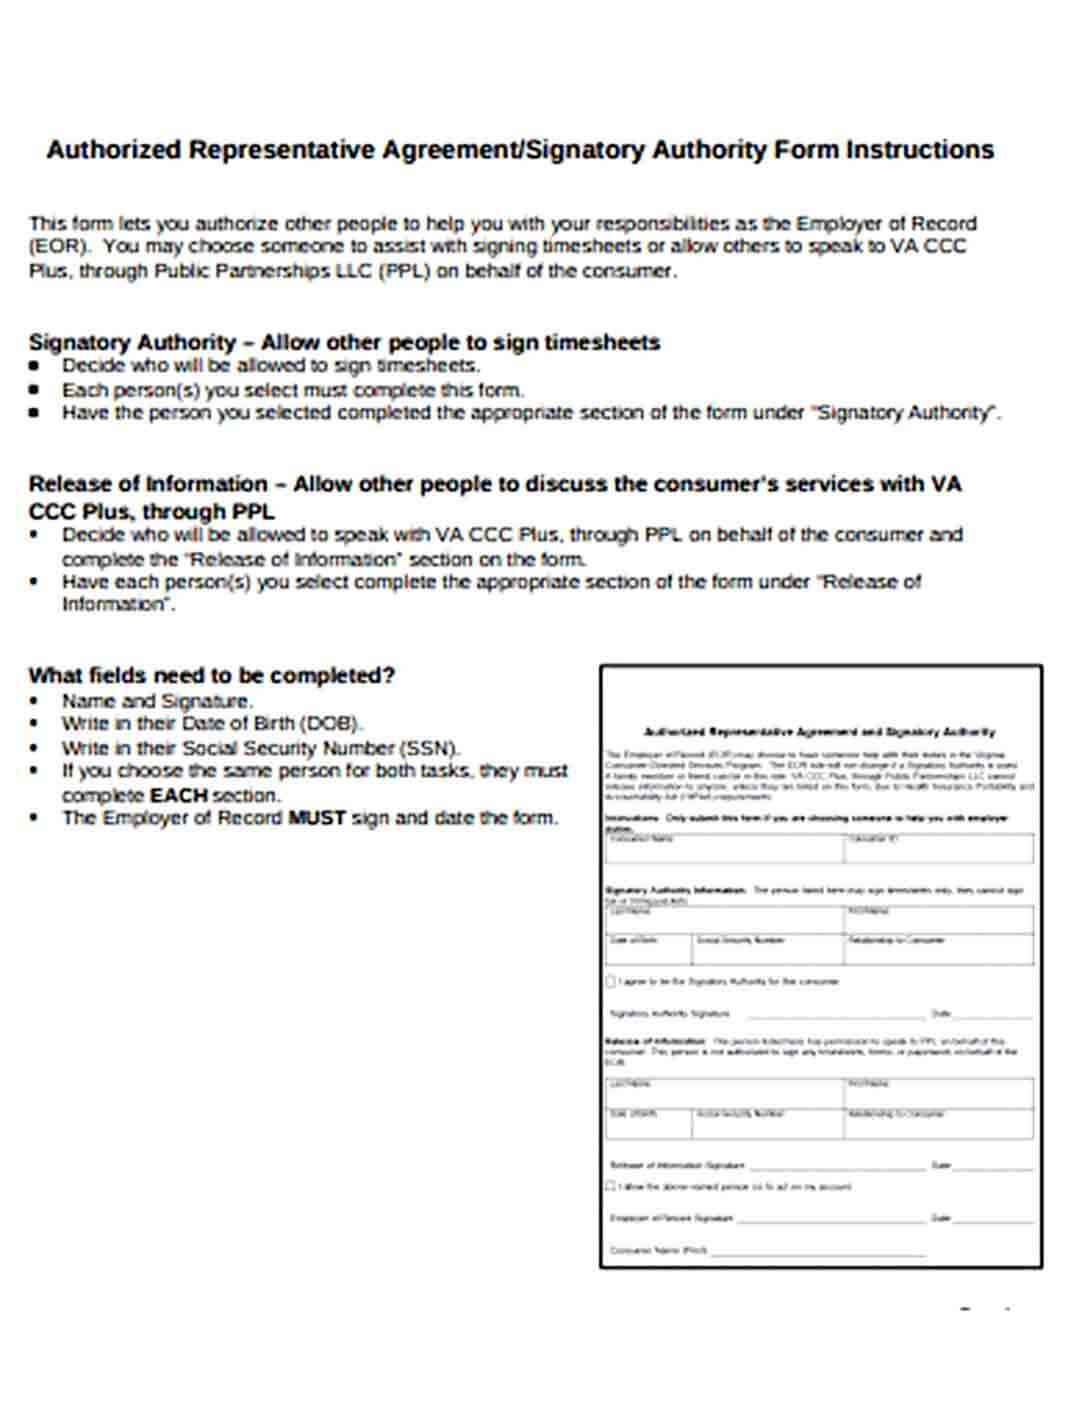 Sample Authorised Agreement in PDF